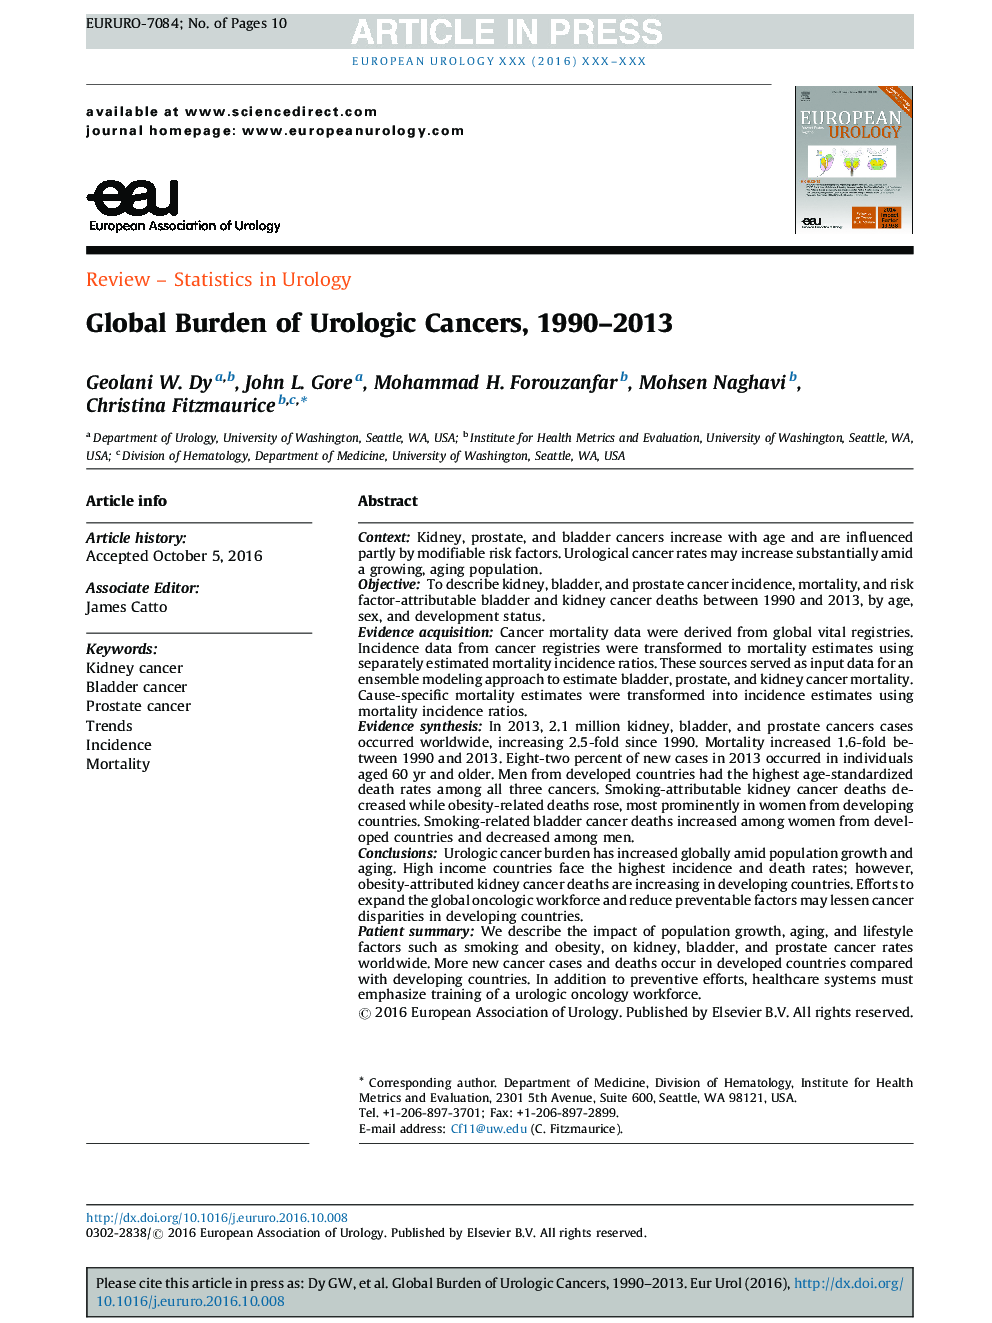 Global Burden of Urologic Cancers, 1990-2013